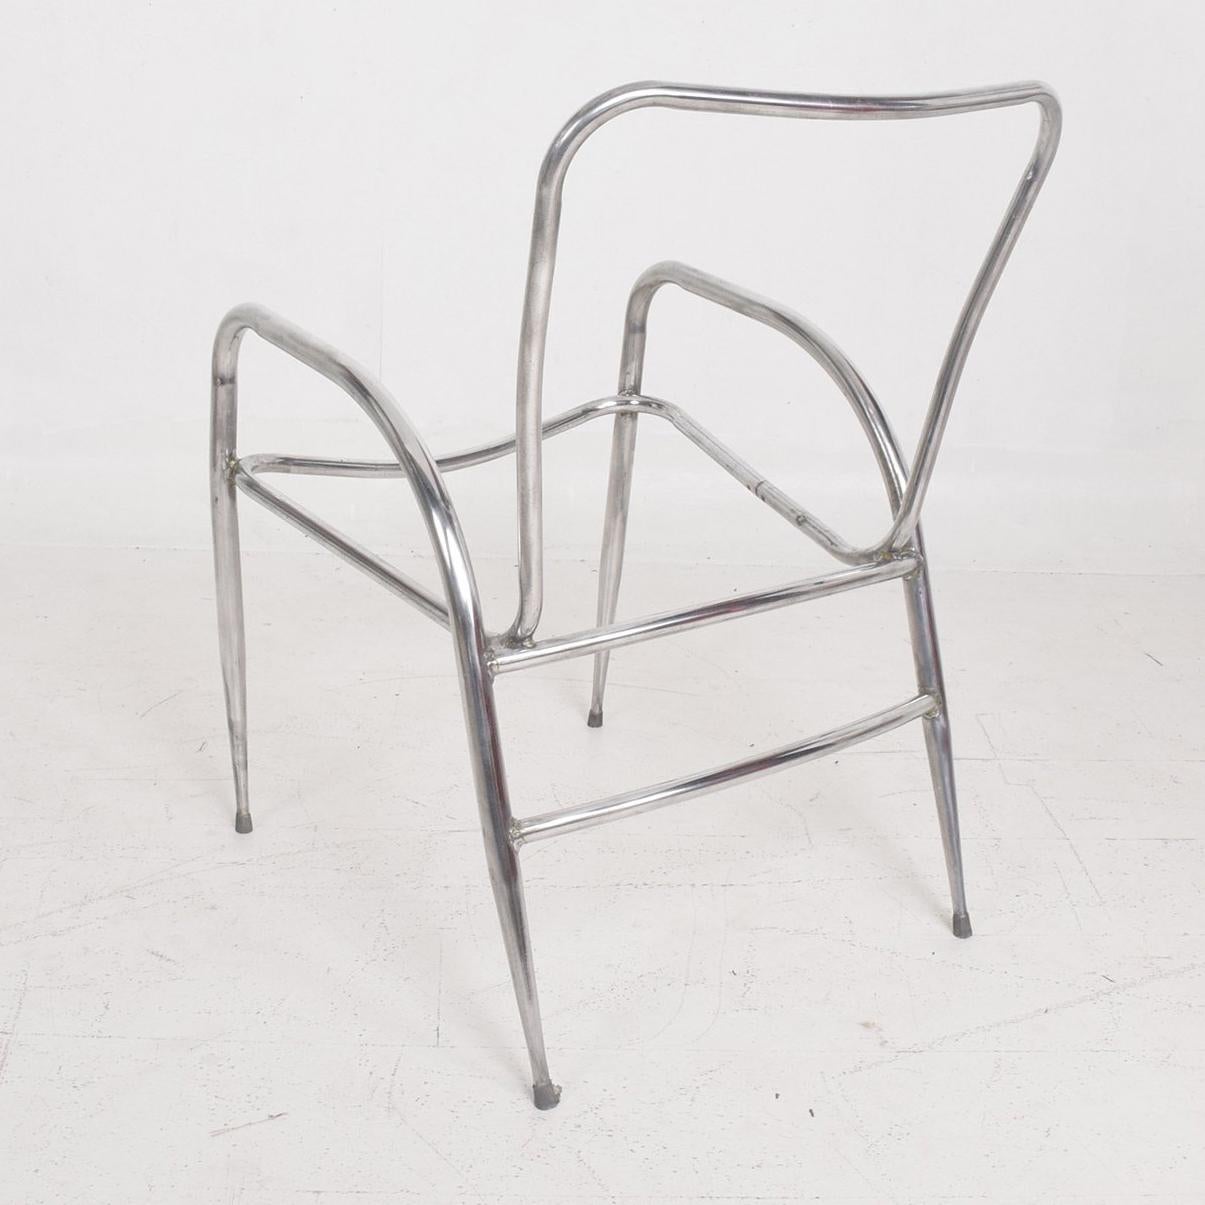 Polished Pair of Sculptural Brown Jordan Aluminum Patio Chairs after Walter Lamb